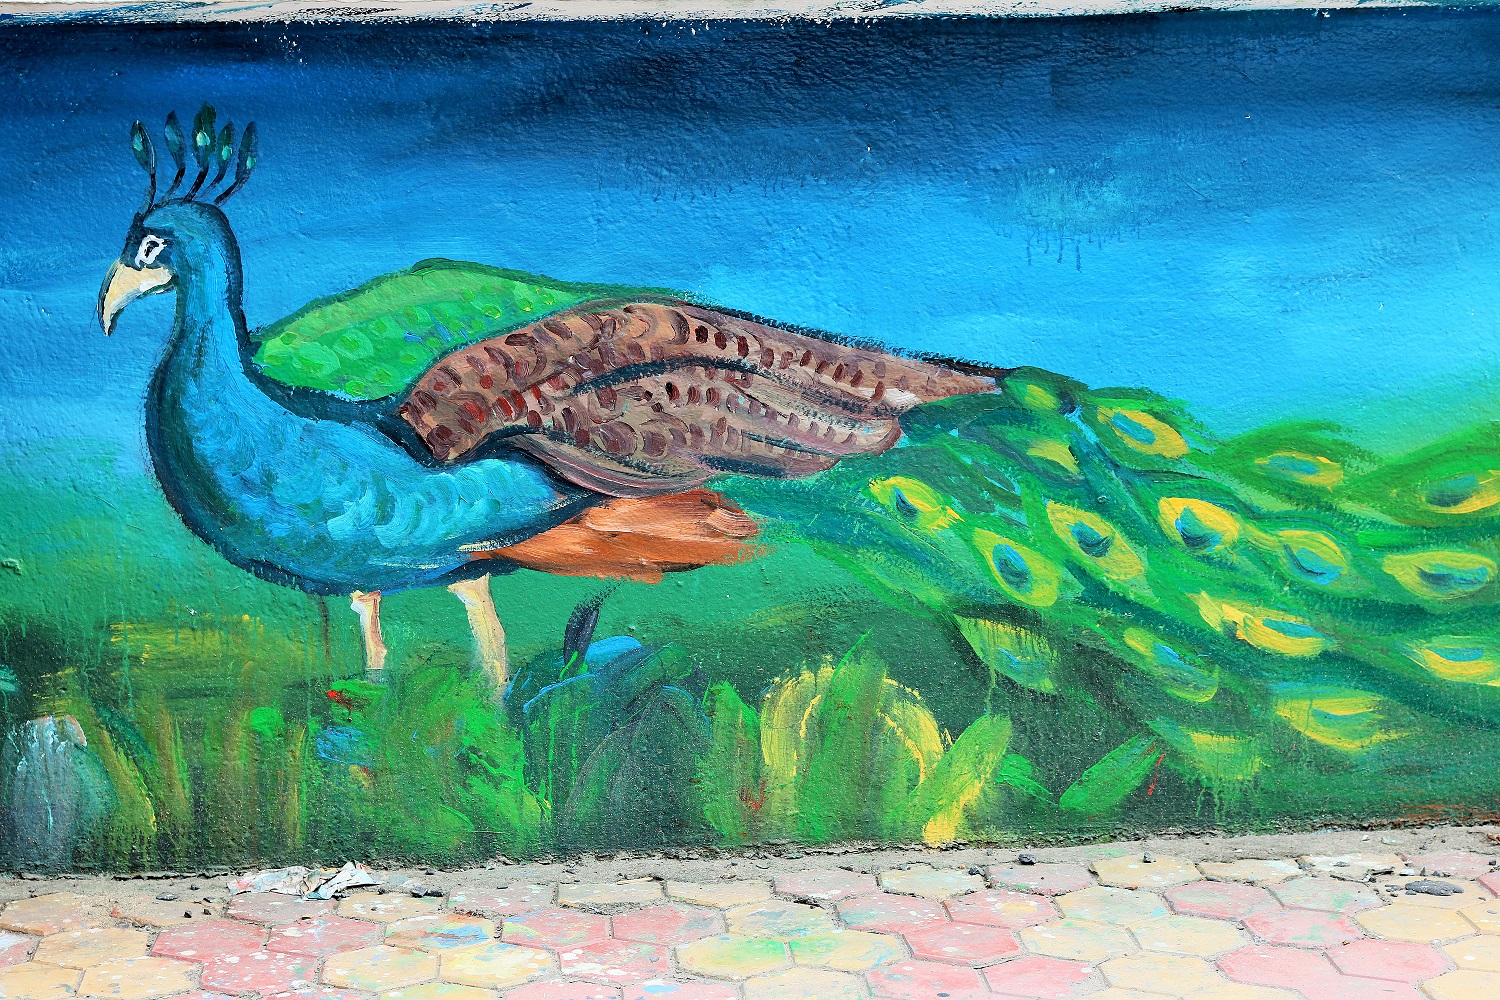 Kolkata Street Art Festival by Berger Paints India